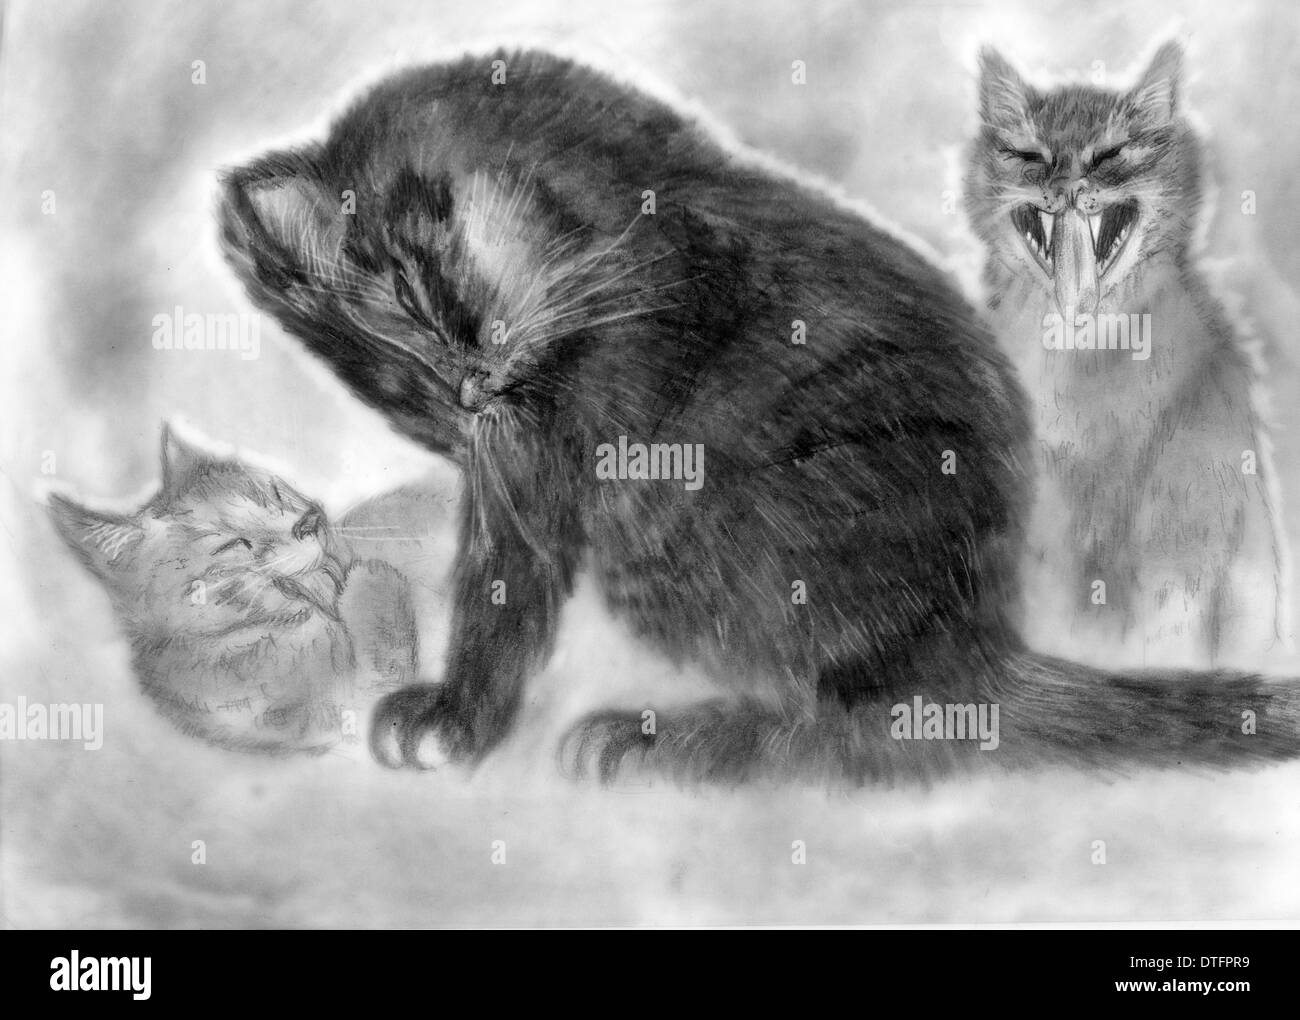 morning cats. three cats woke up and freshen yourself Stock Photo